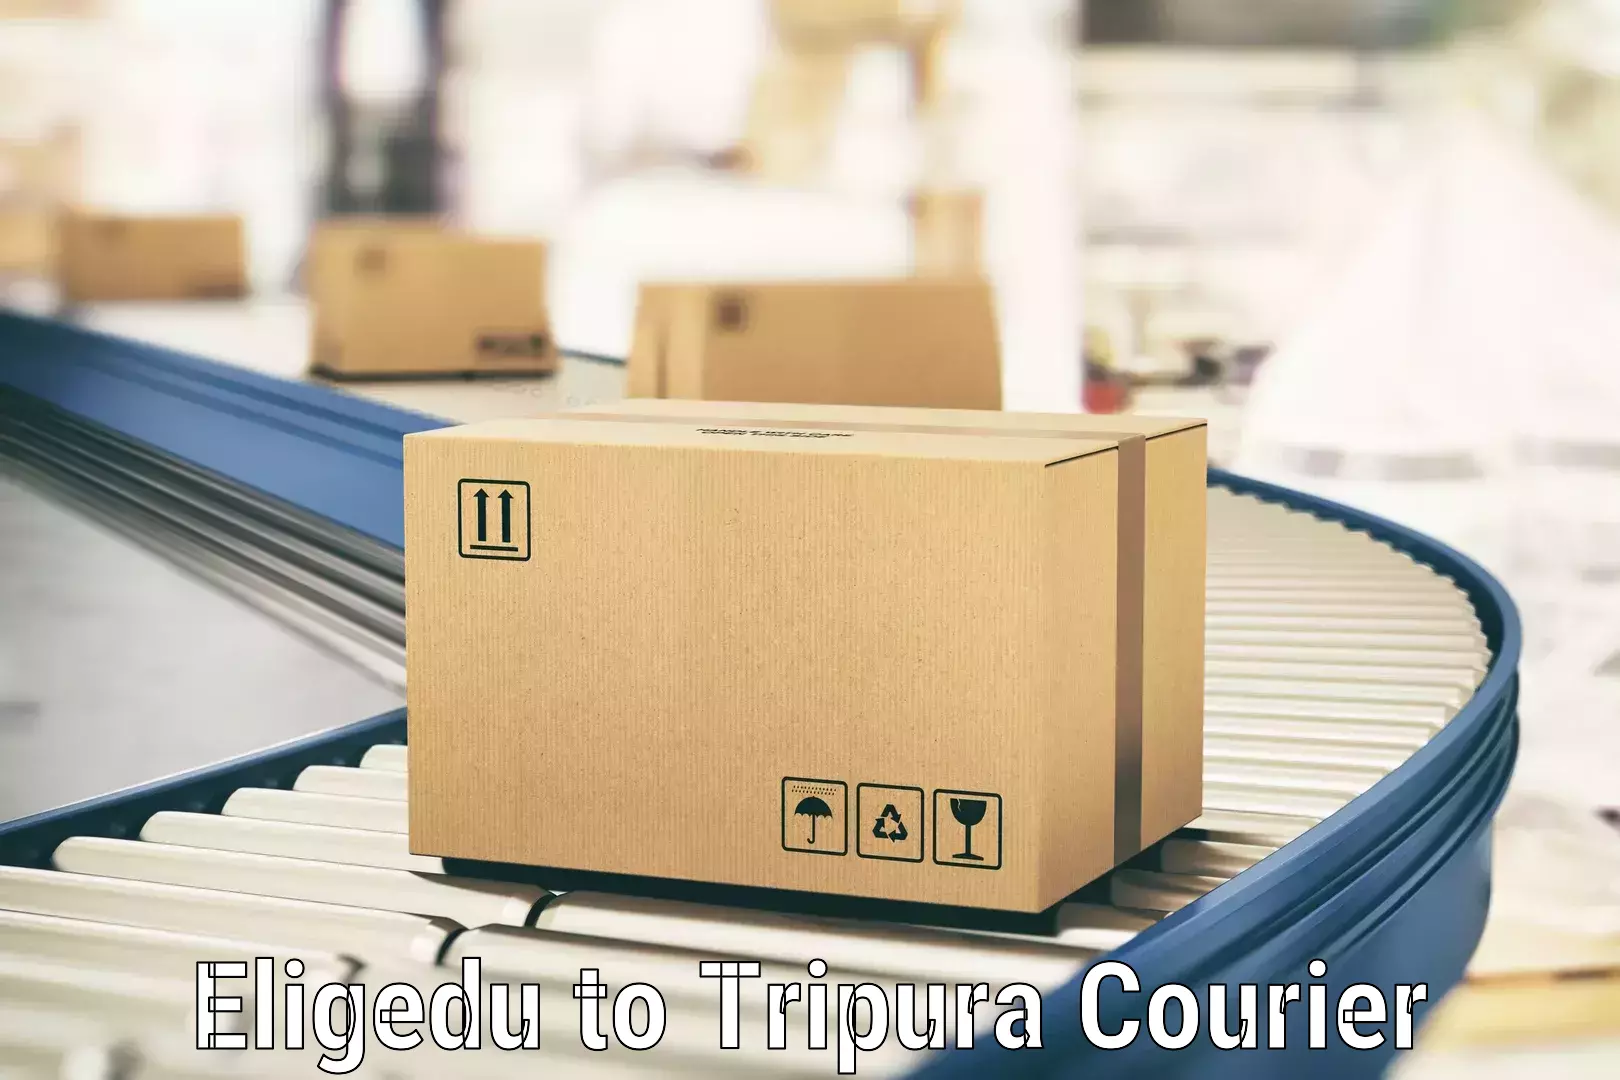 Reliable logistics providers Eligedu to Tripura